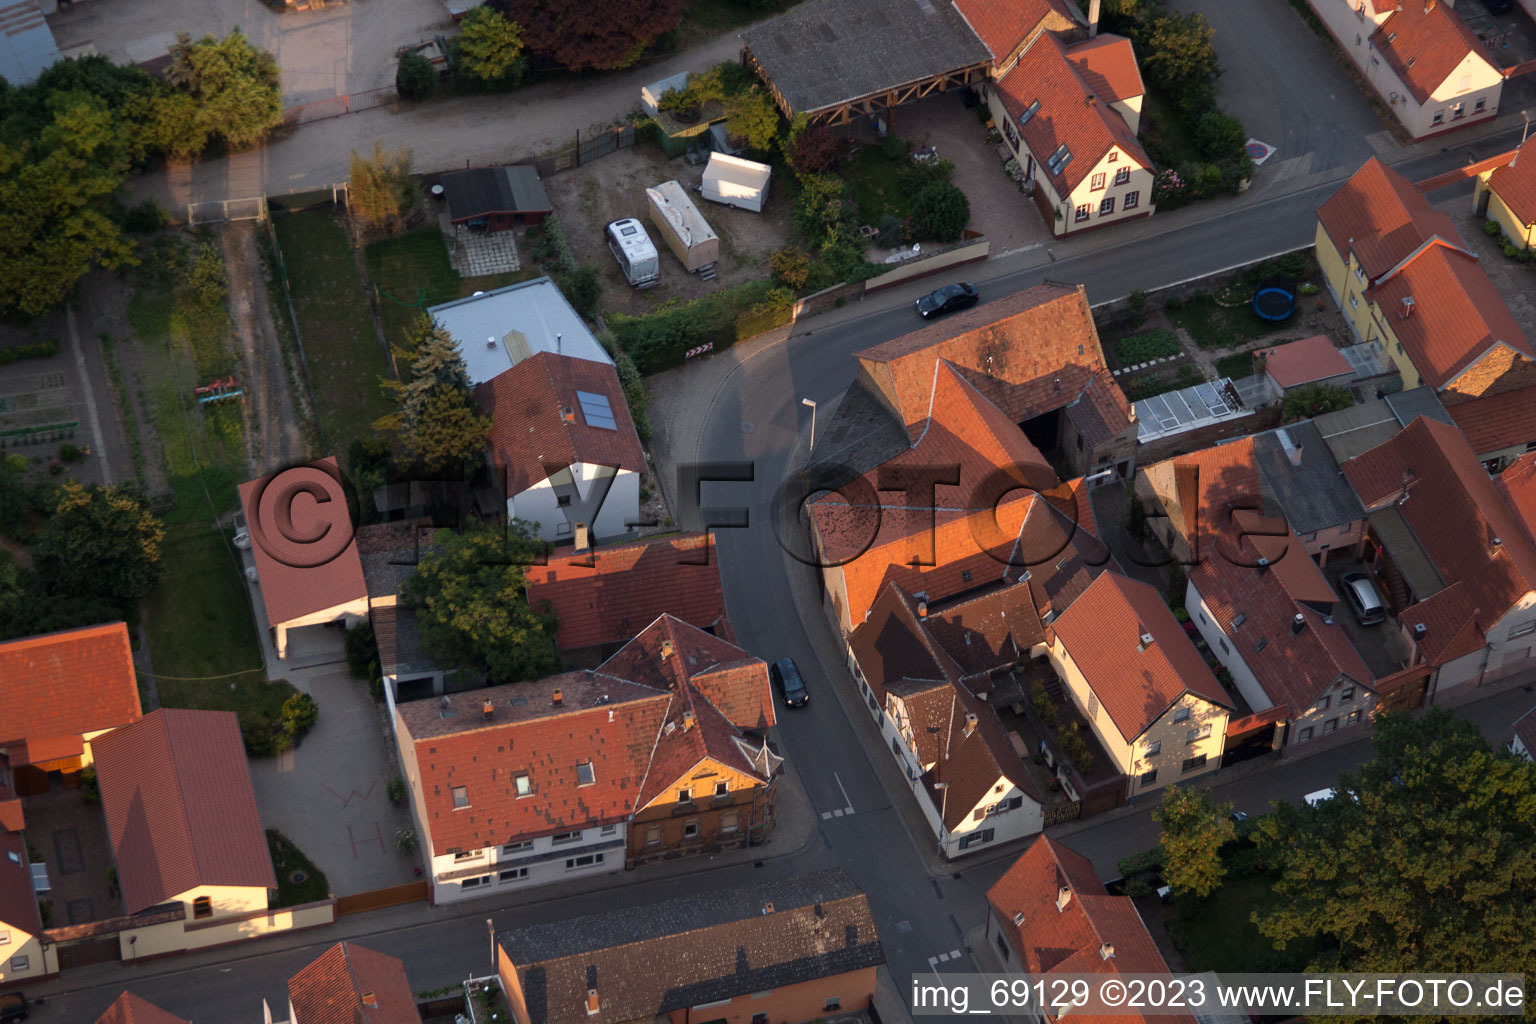 District Bobenheim in Bobenheim-Roxheim in the state Rhineland-Palatinate, Germany seen from a drone